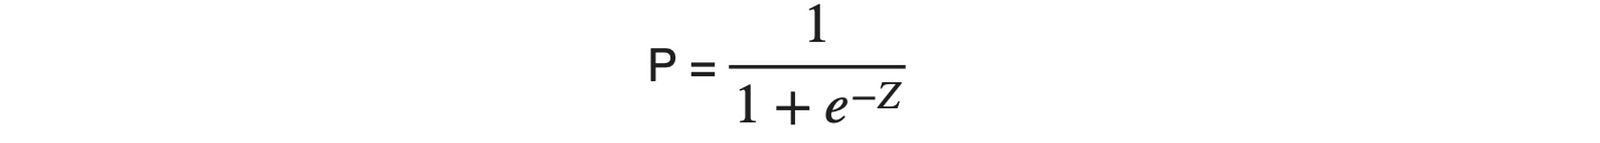 Sigmoid equation